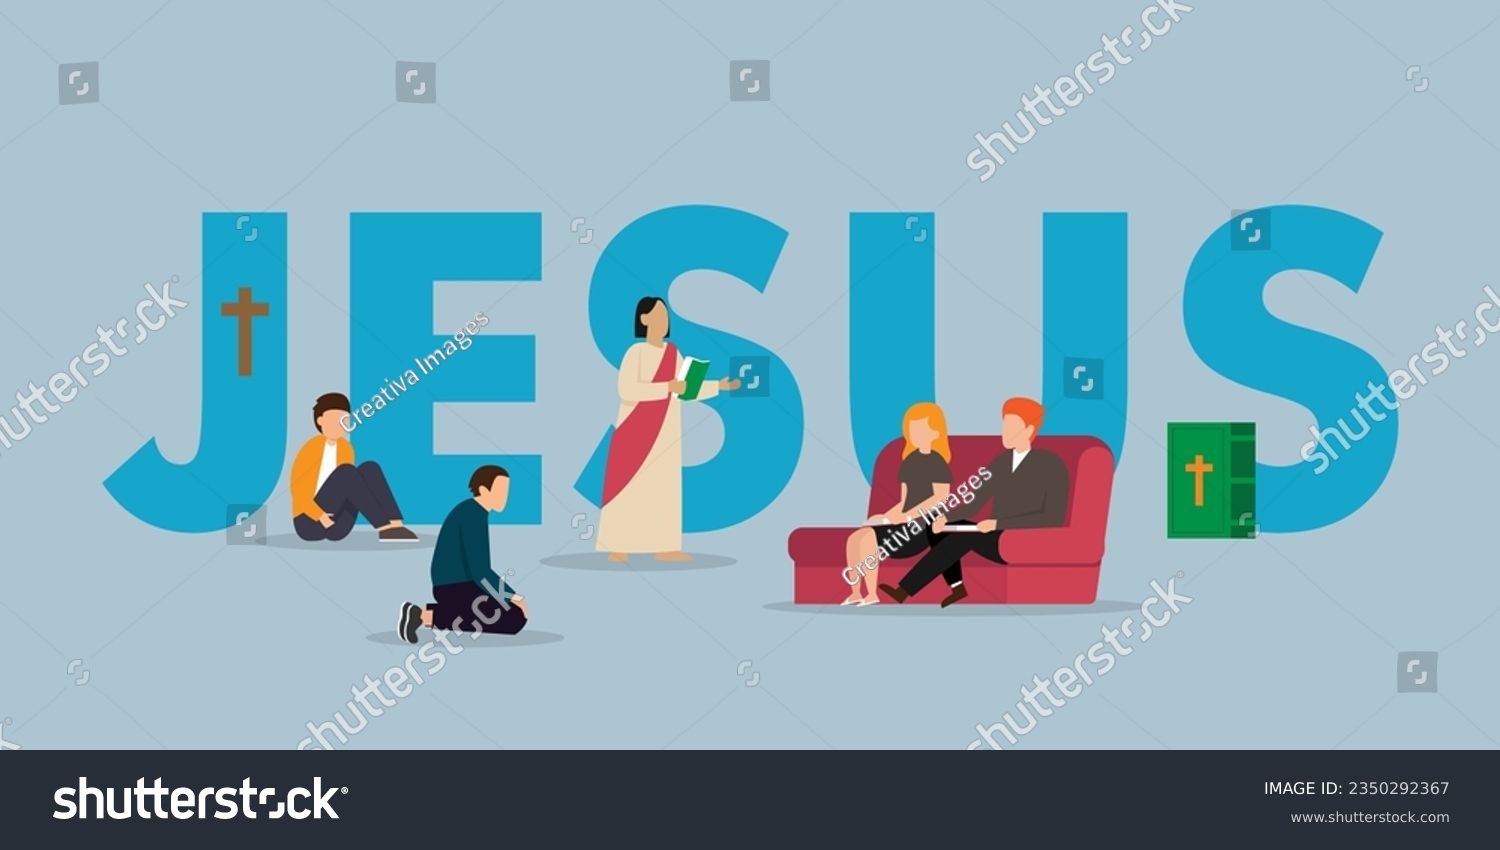 SVG of Religious People and Jesus Christ 2d vector illustration concept for banner, website, landing page, flyer, etc svg